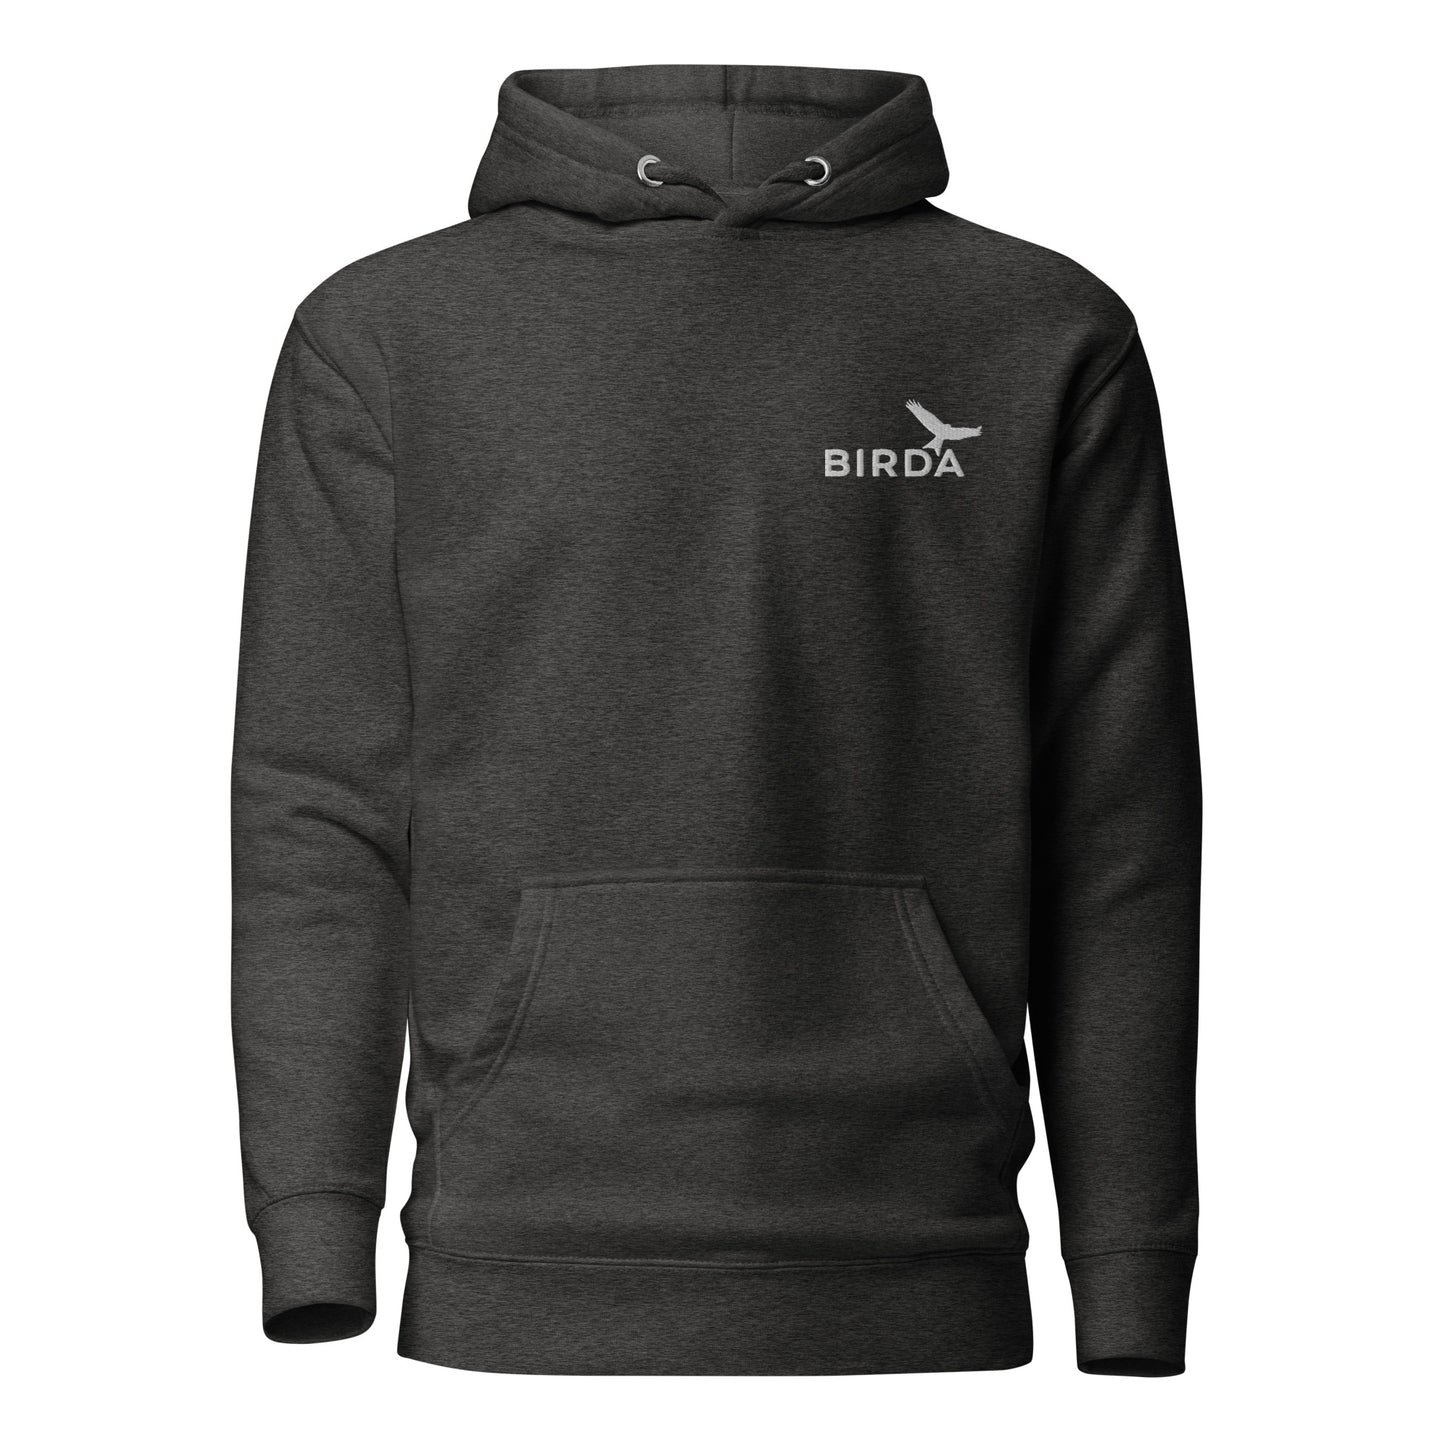 Birda bird premium hoodie - charcoal